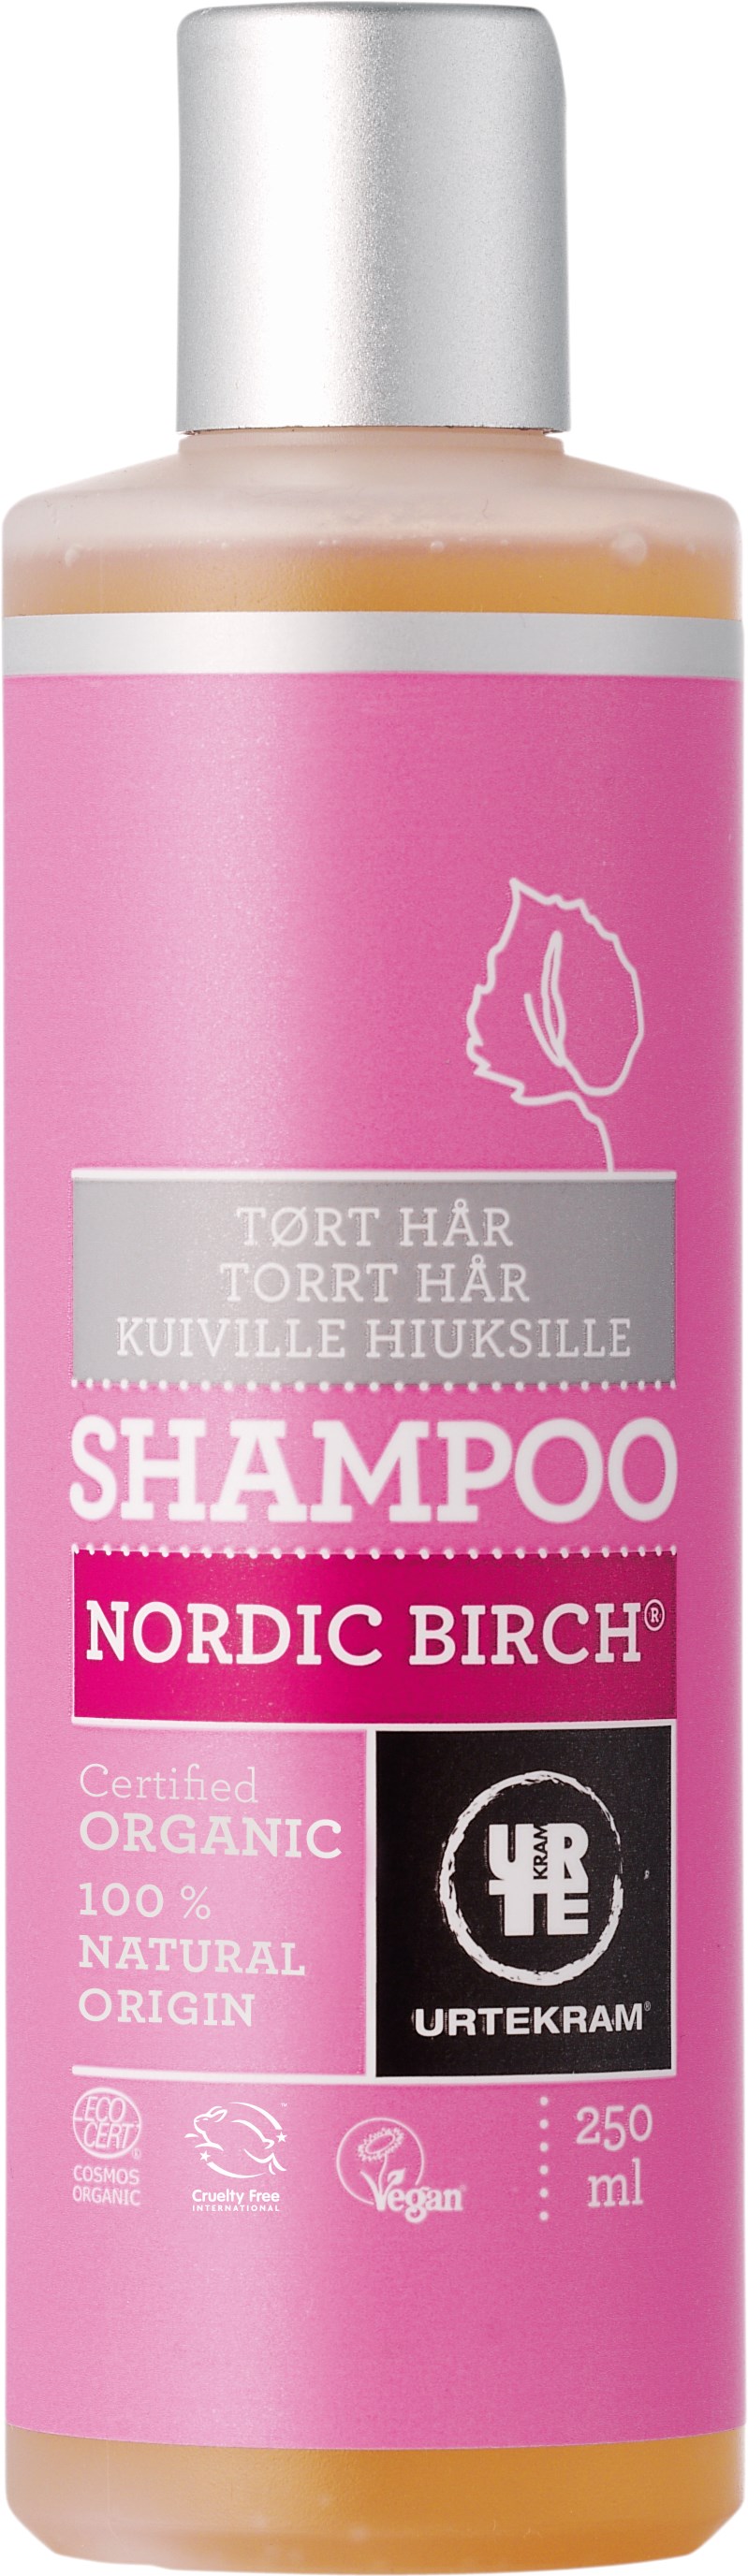 Urtekram Nordic Birch Shampoo Dry Hair 250ml